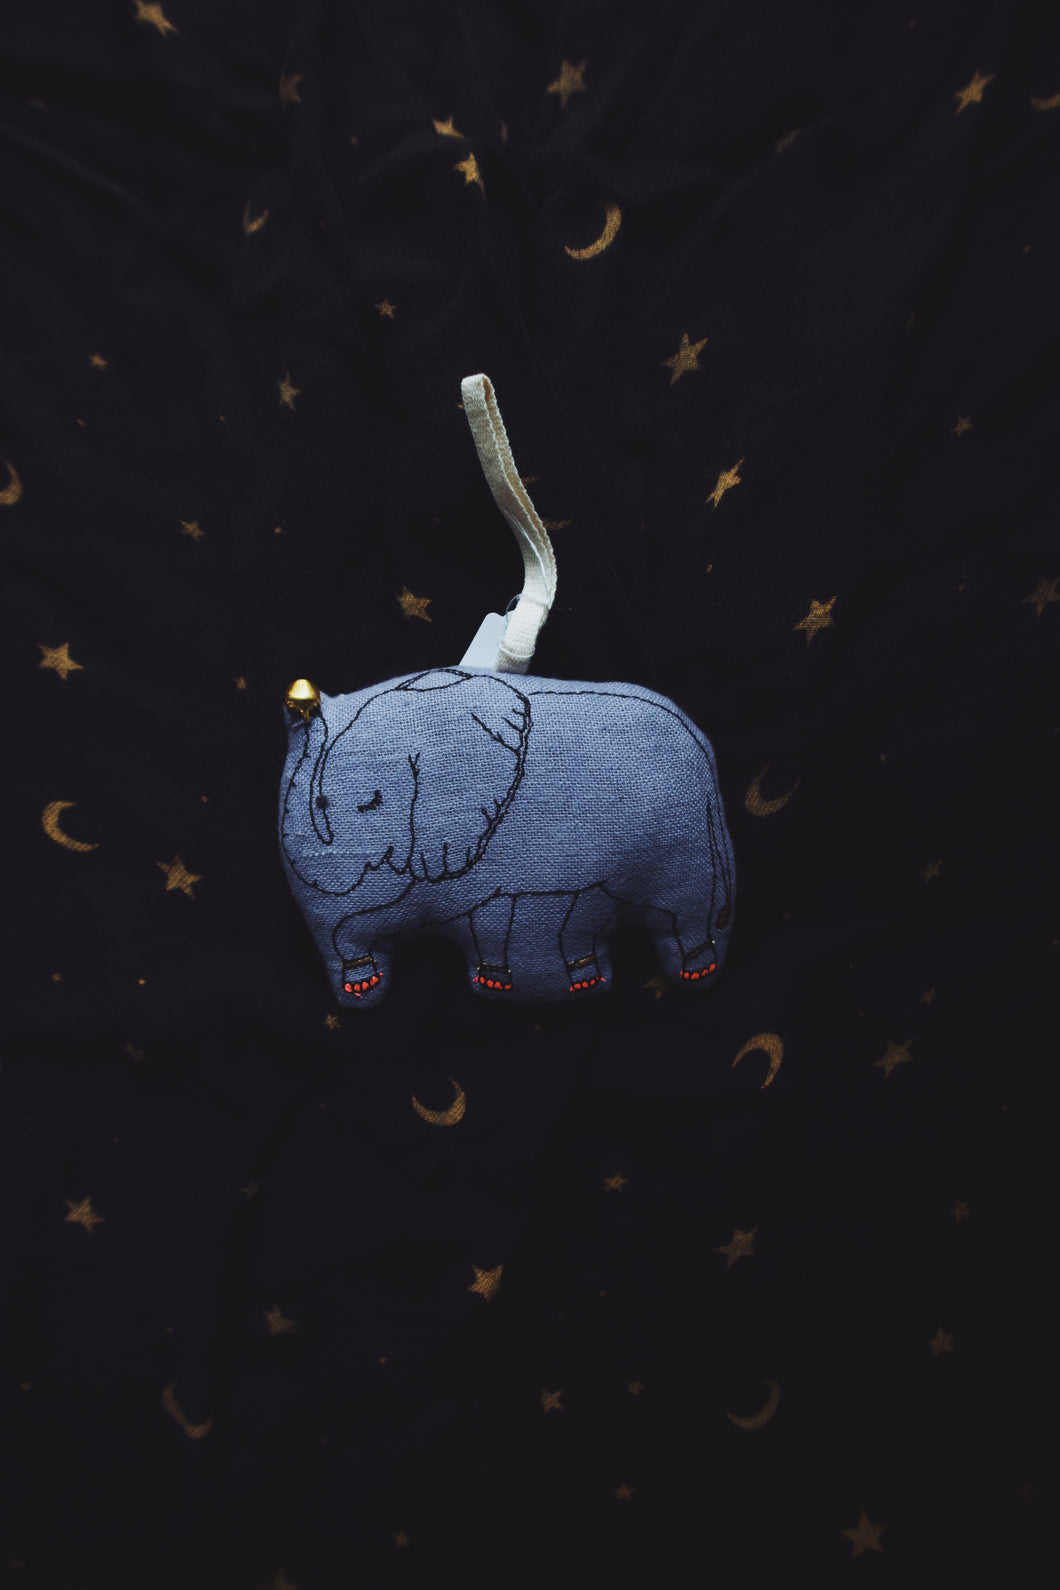 Blue Elephant Ornament